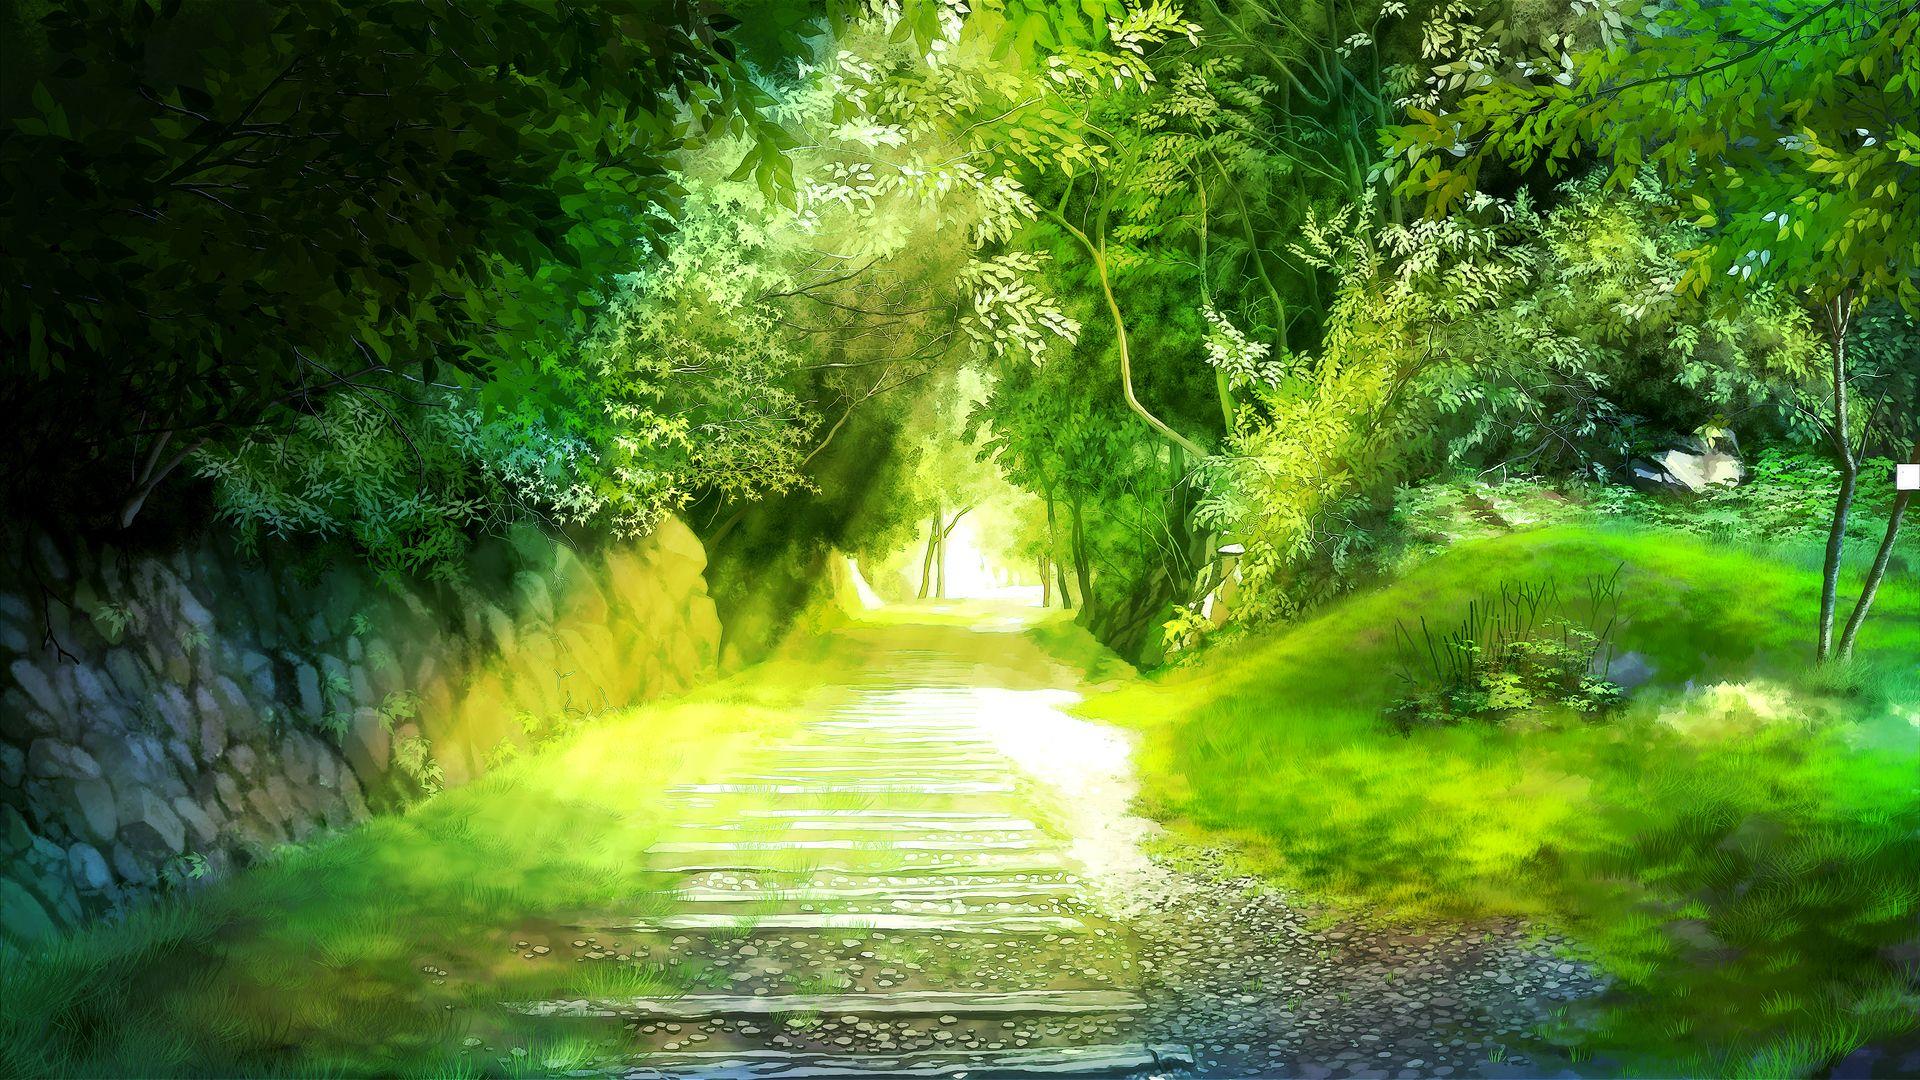 Materi Pelajaran 5: Anime Forest Backgrounds Scenery